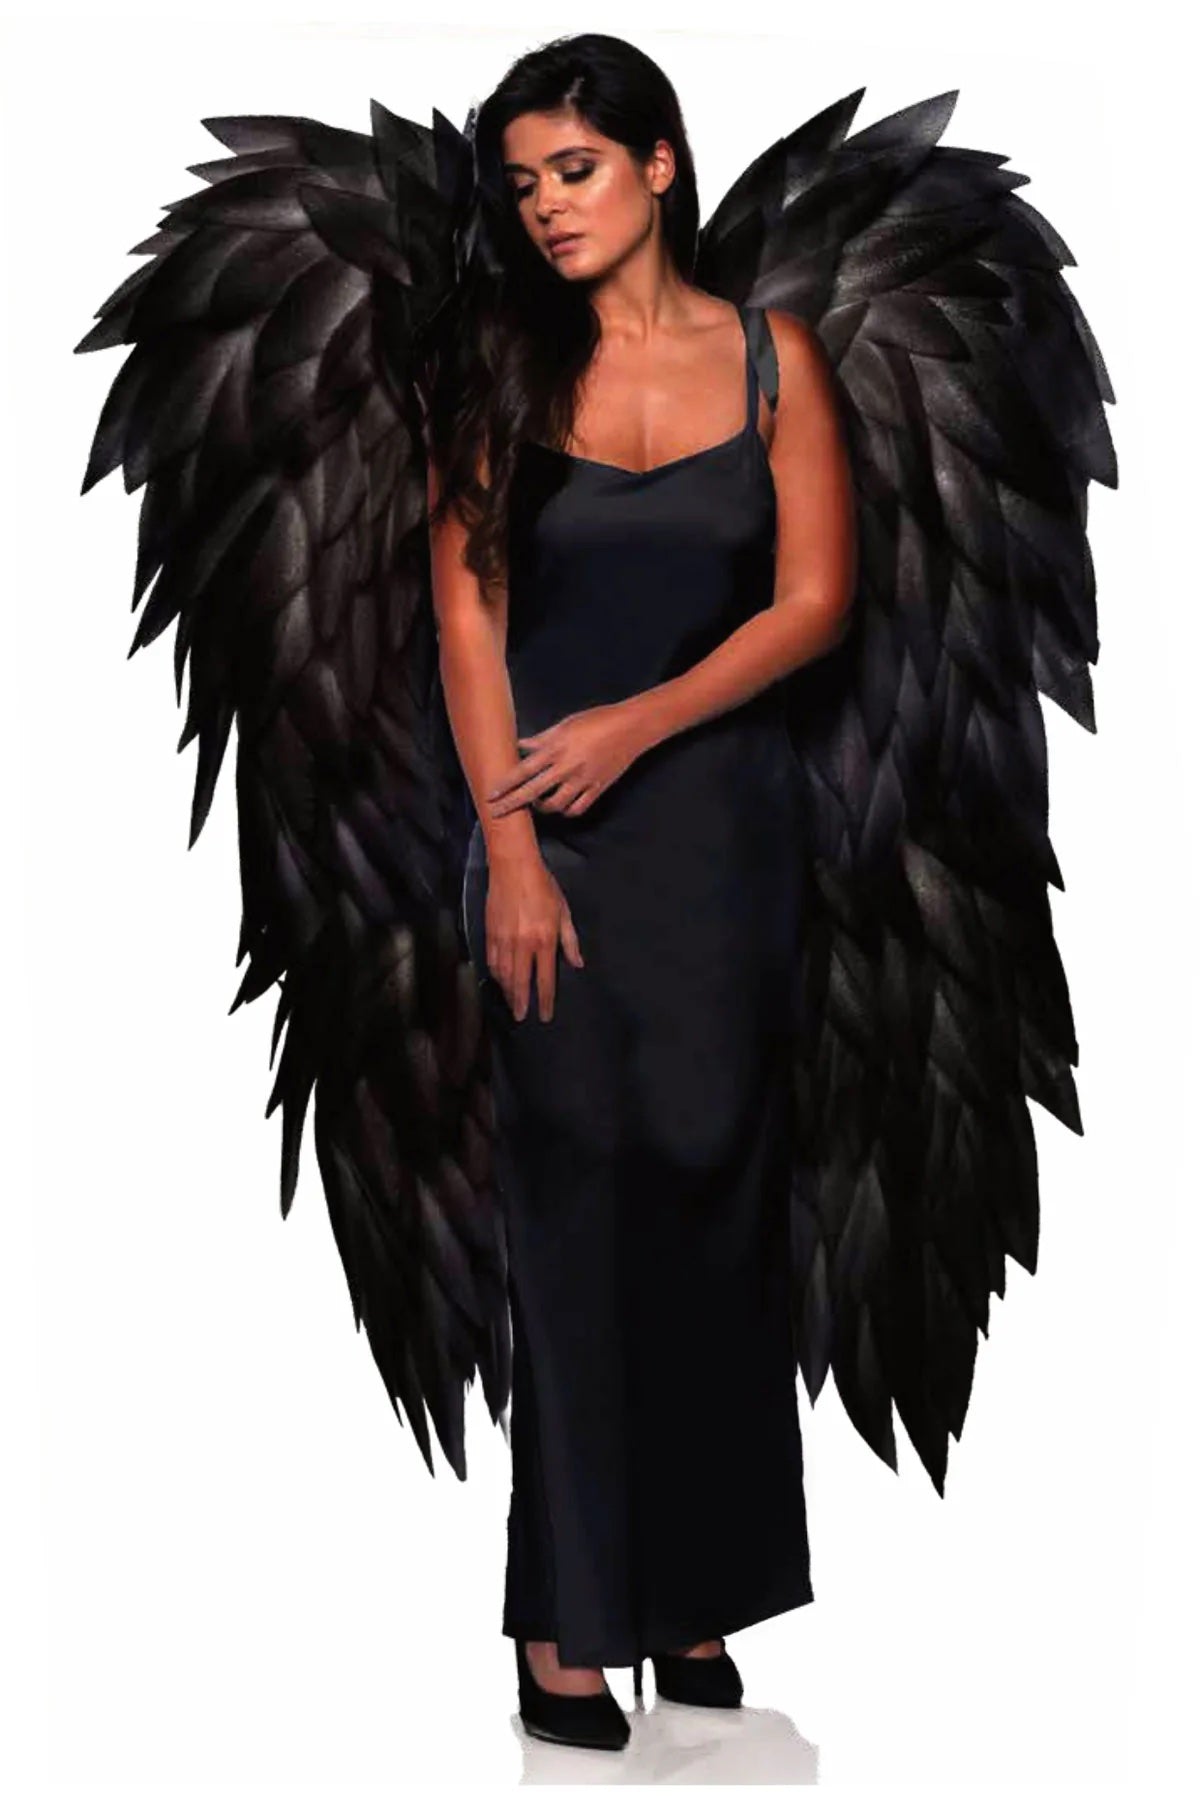 5' Giant Deluxe Angel Wings